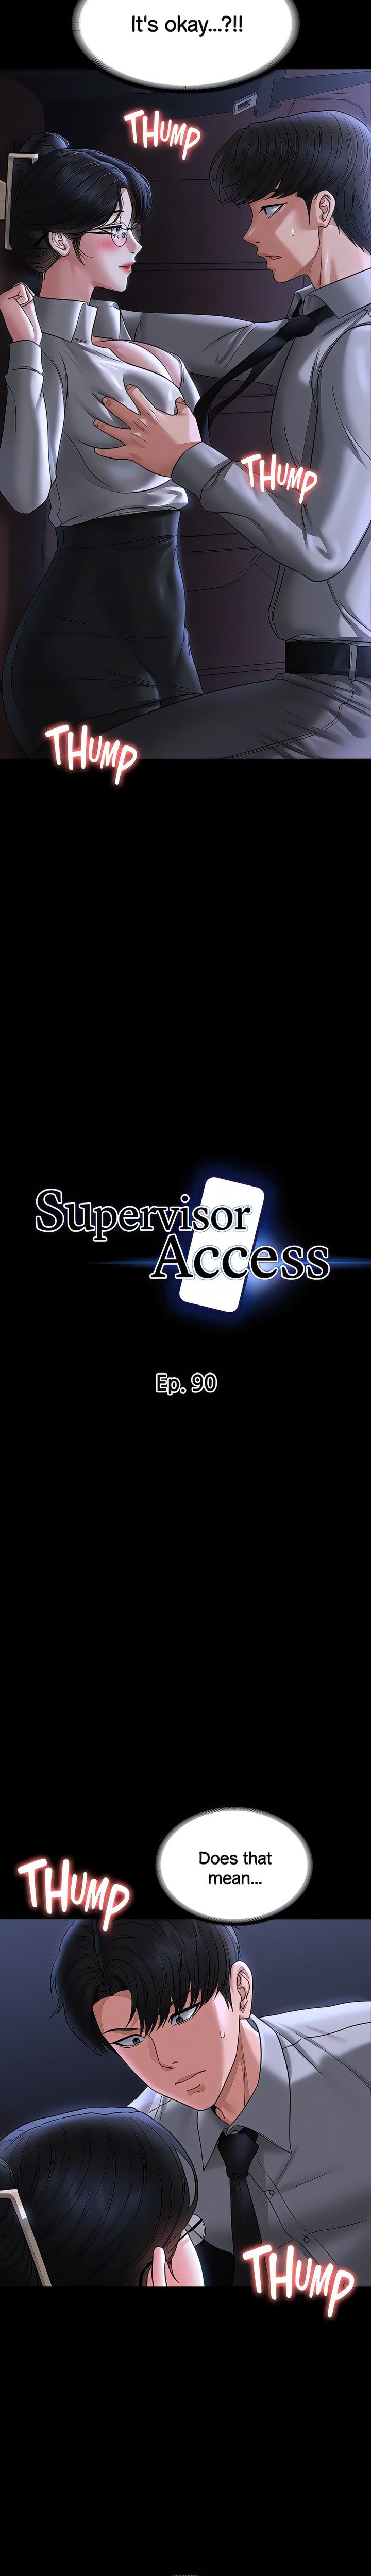 supervisor-access-chap-90-1